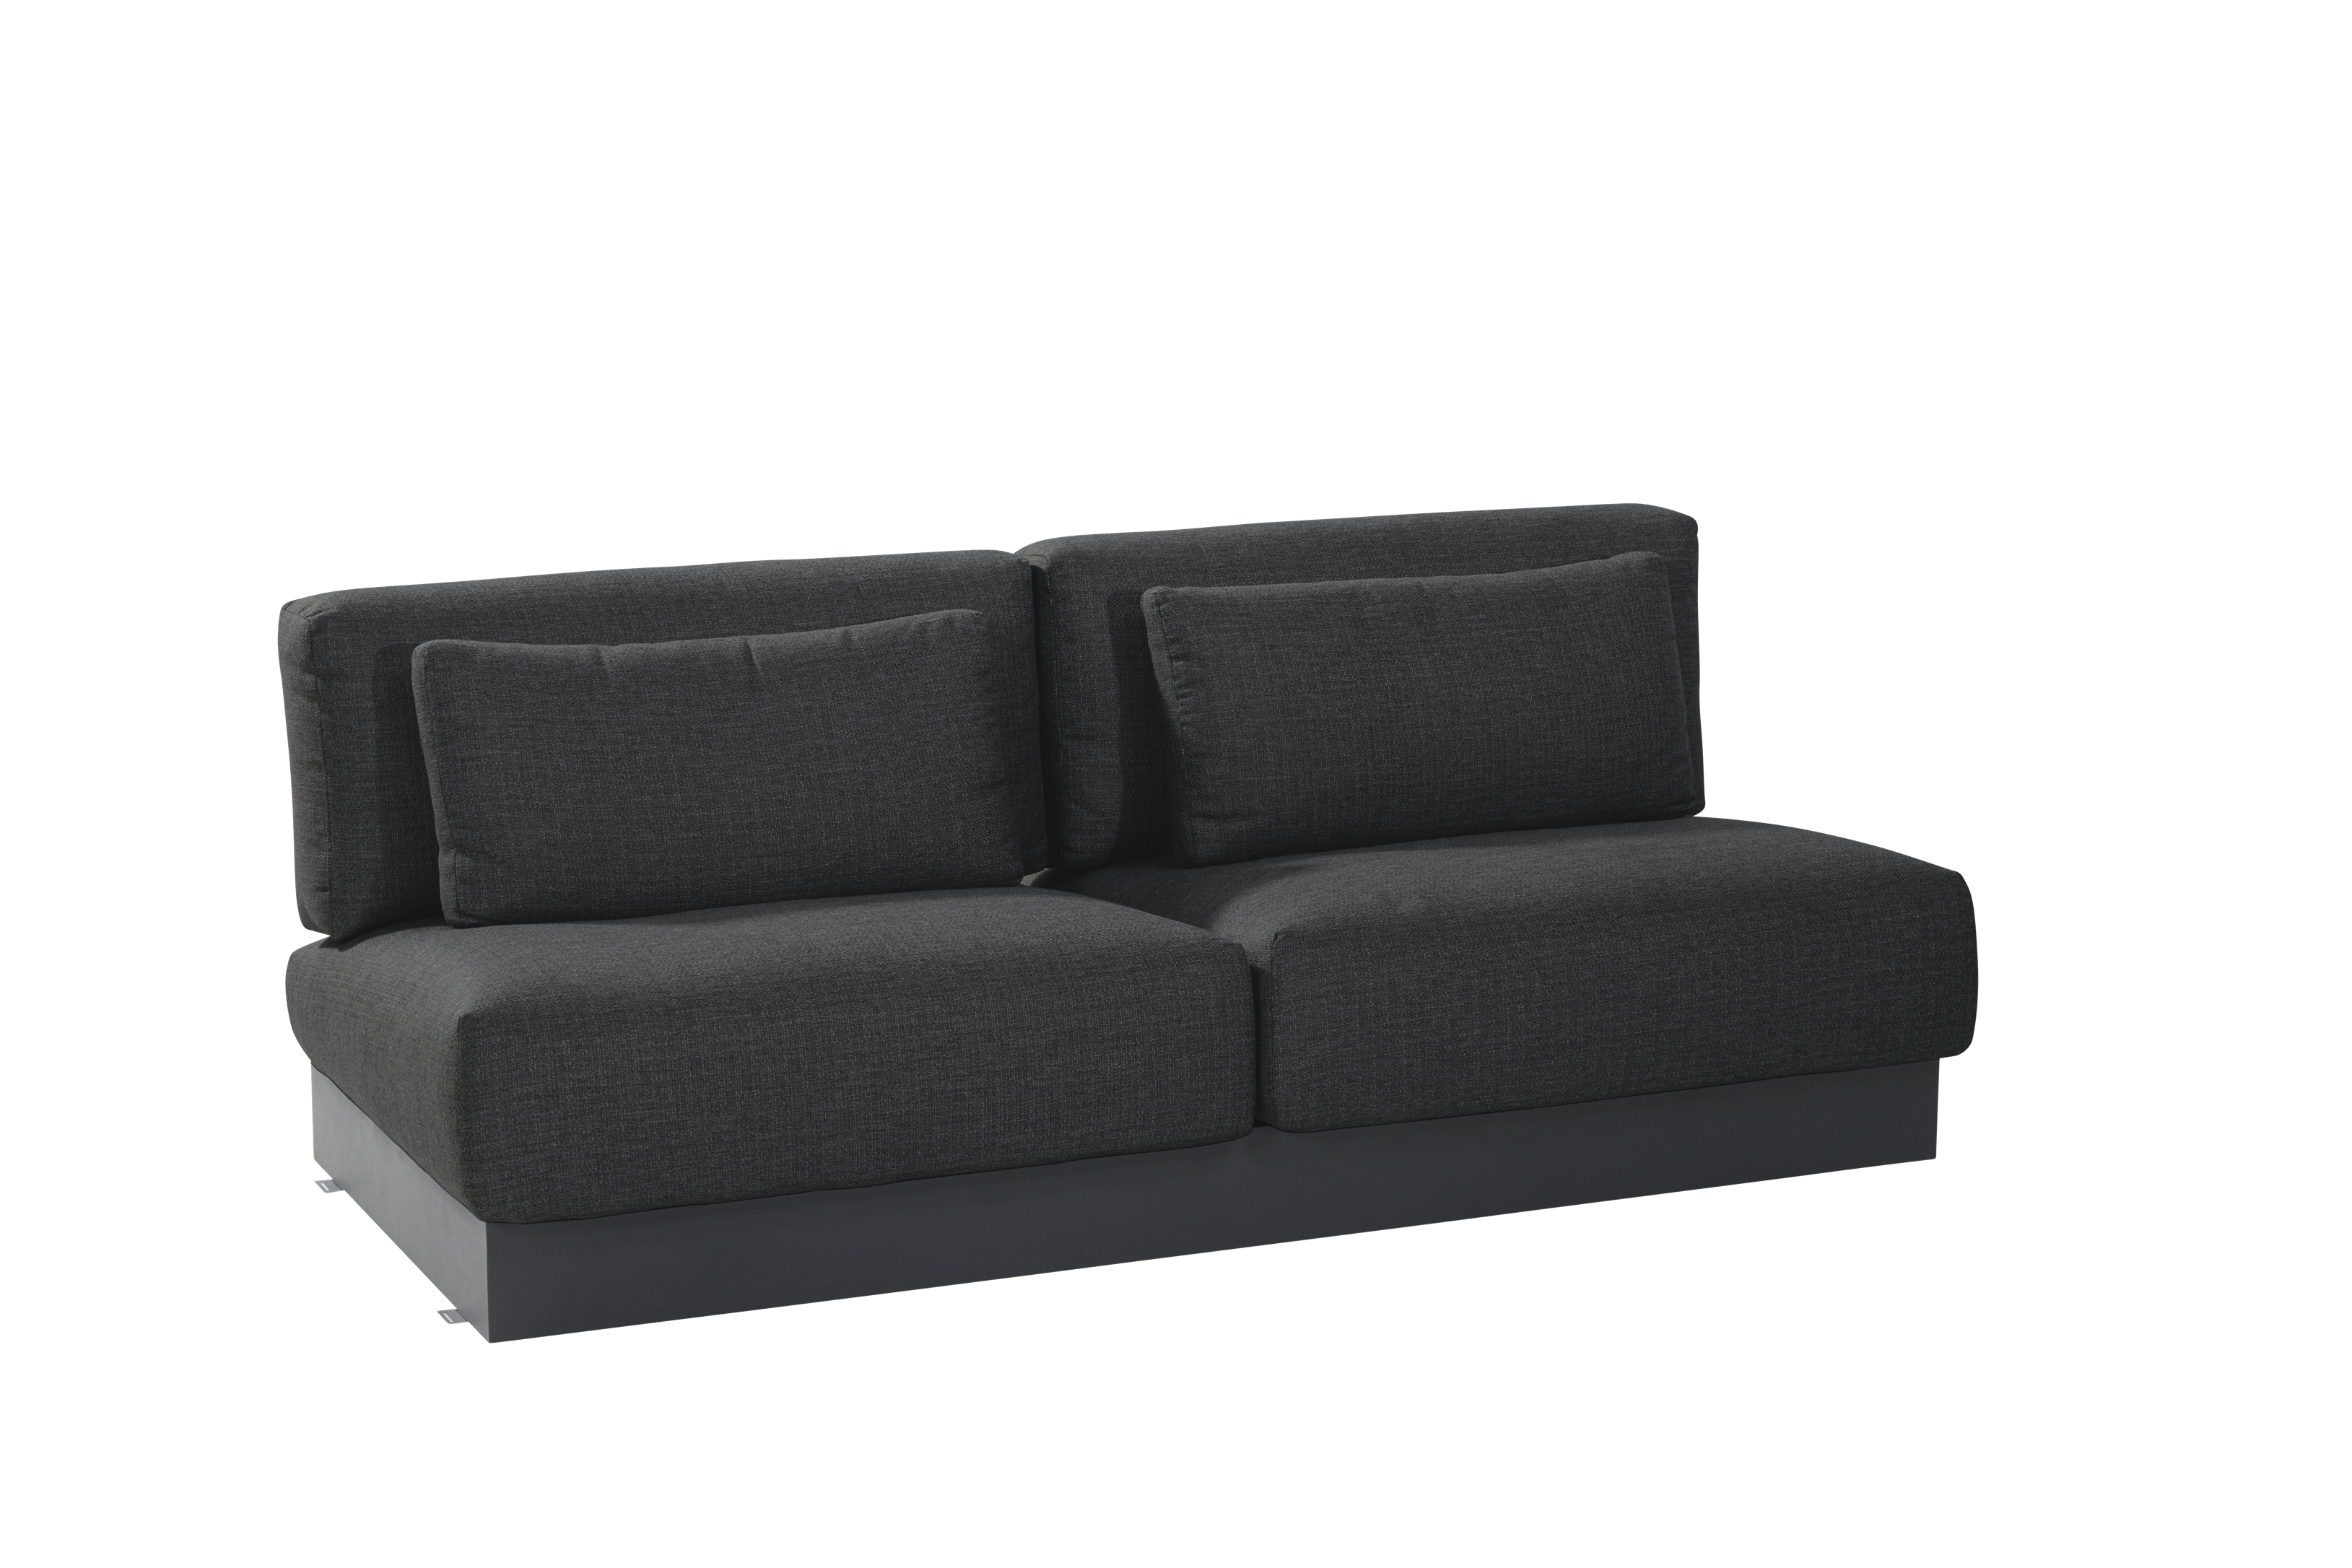 4 Seasons Outdoor Ibiza Modular 2 Seater Bench With 6 Cushions